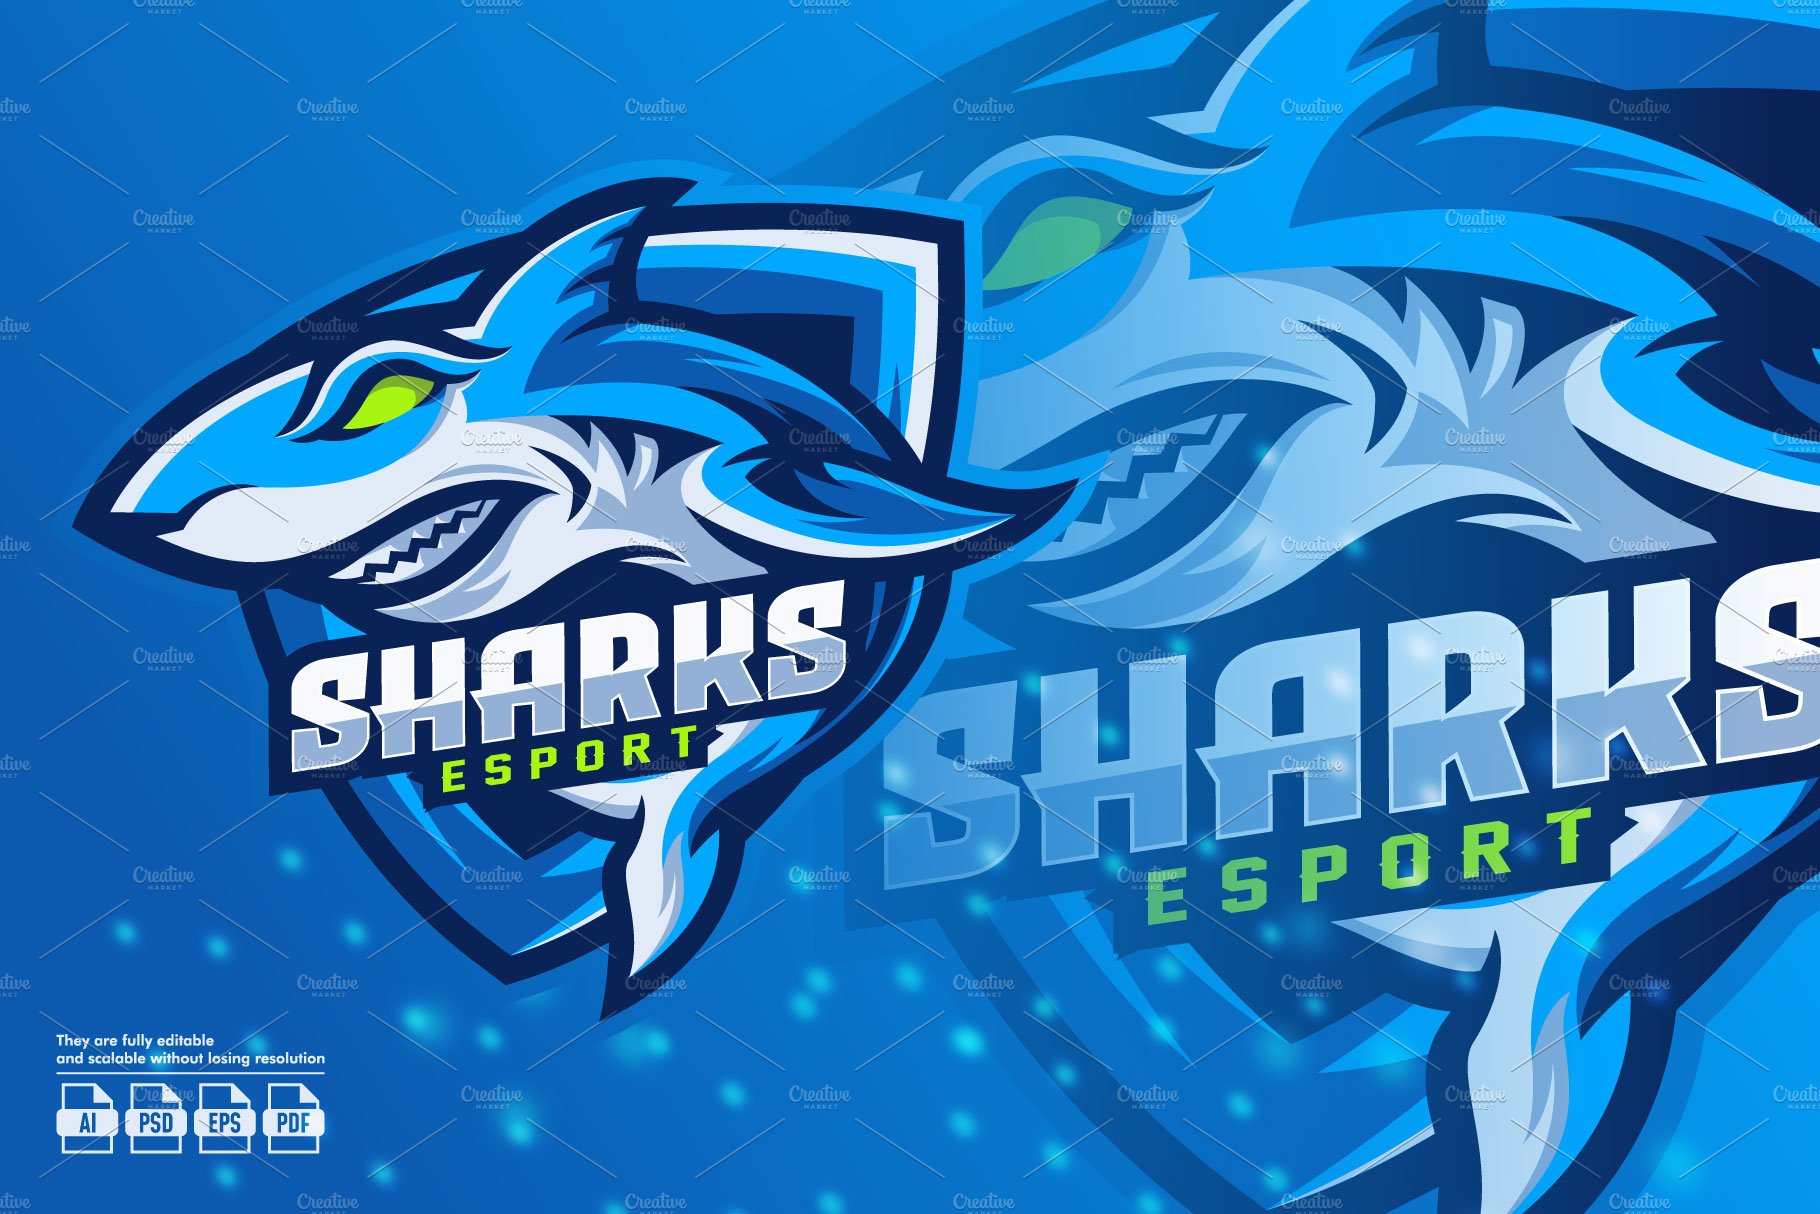 Shark Mascot Esport Logo cover image.